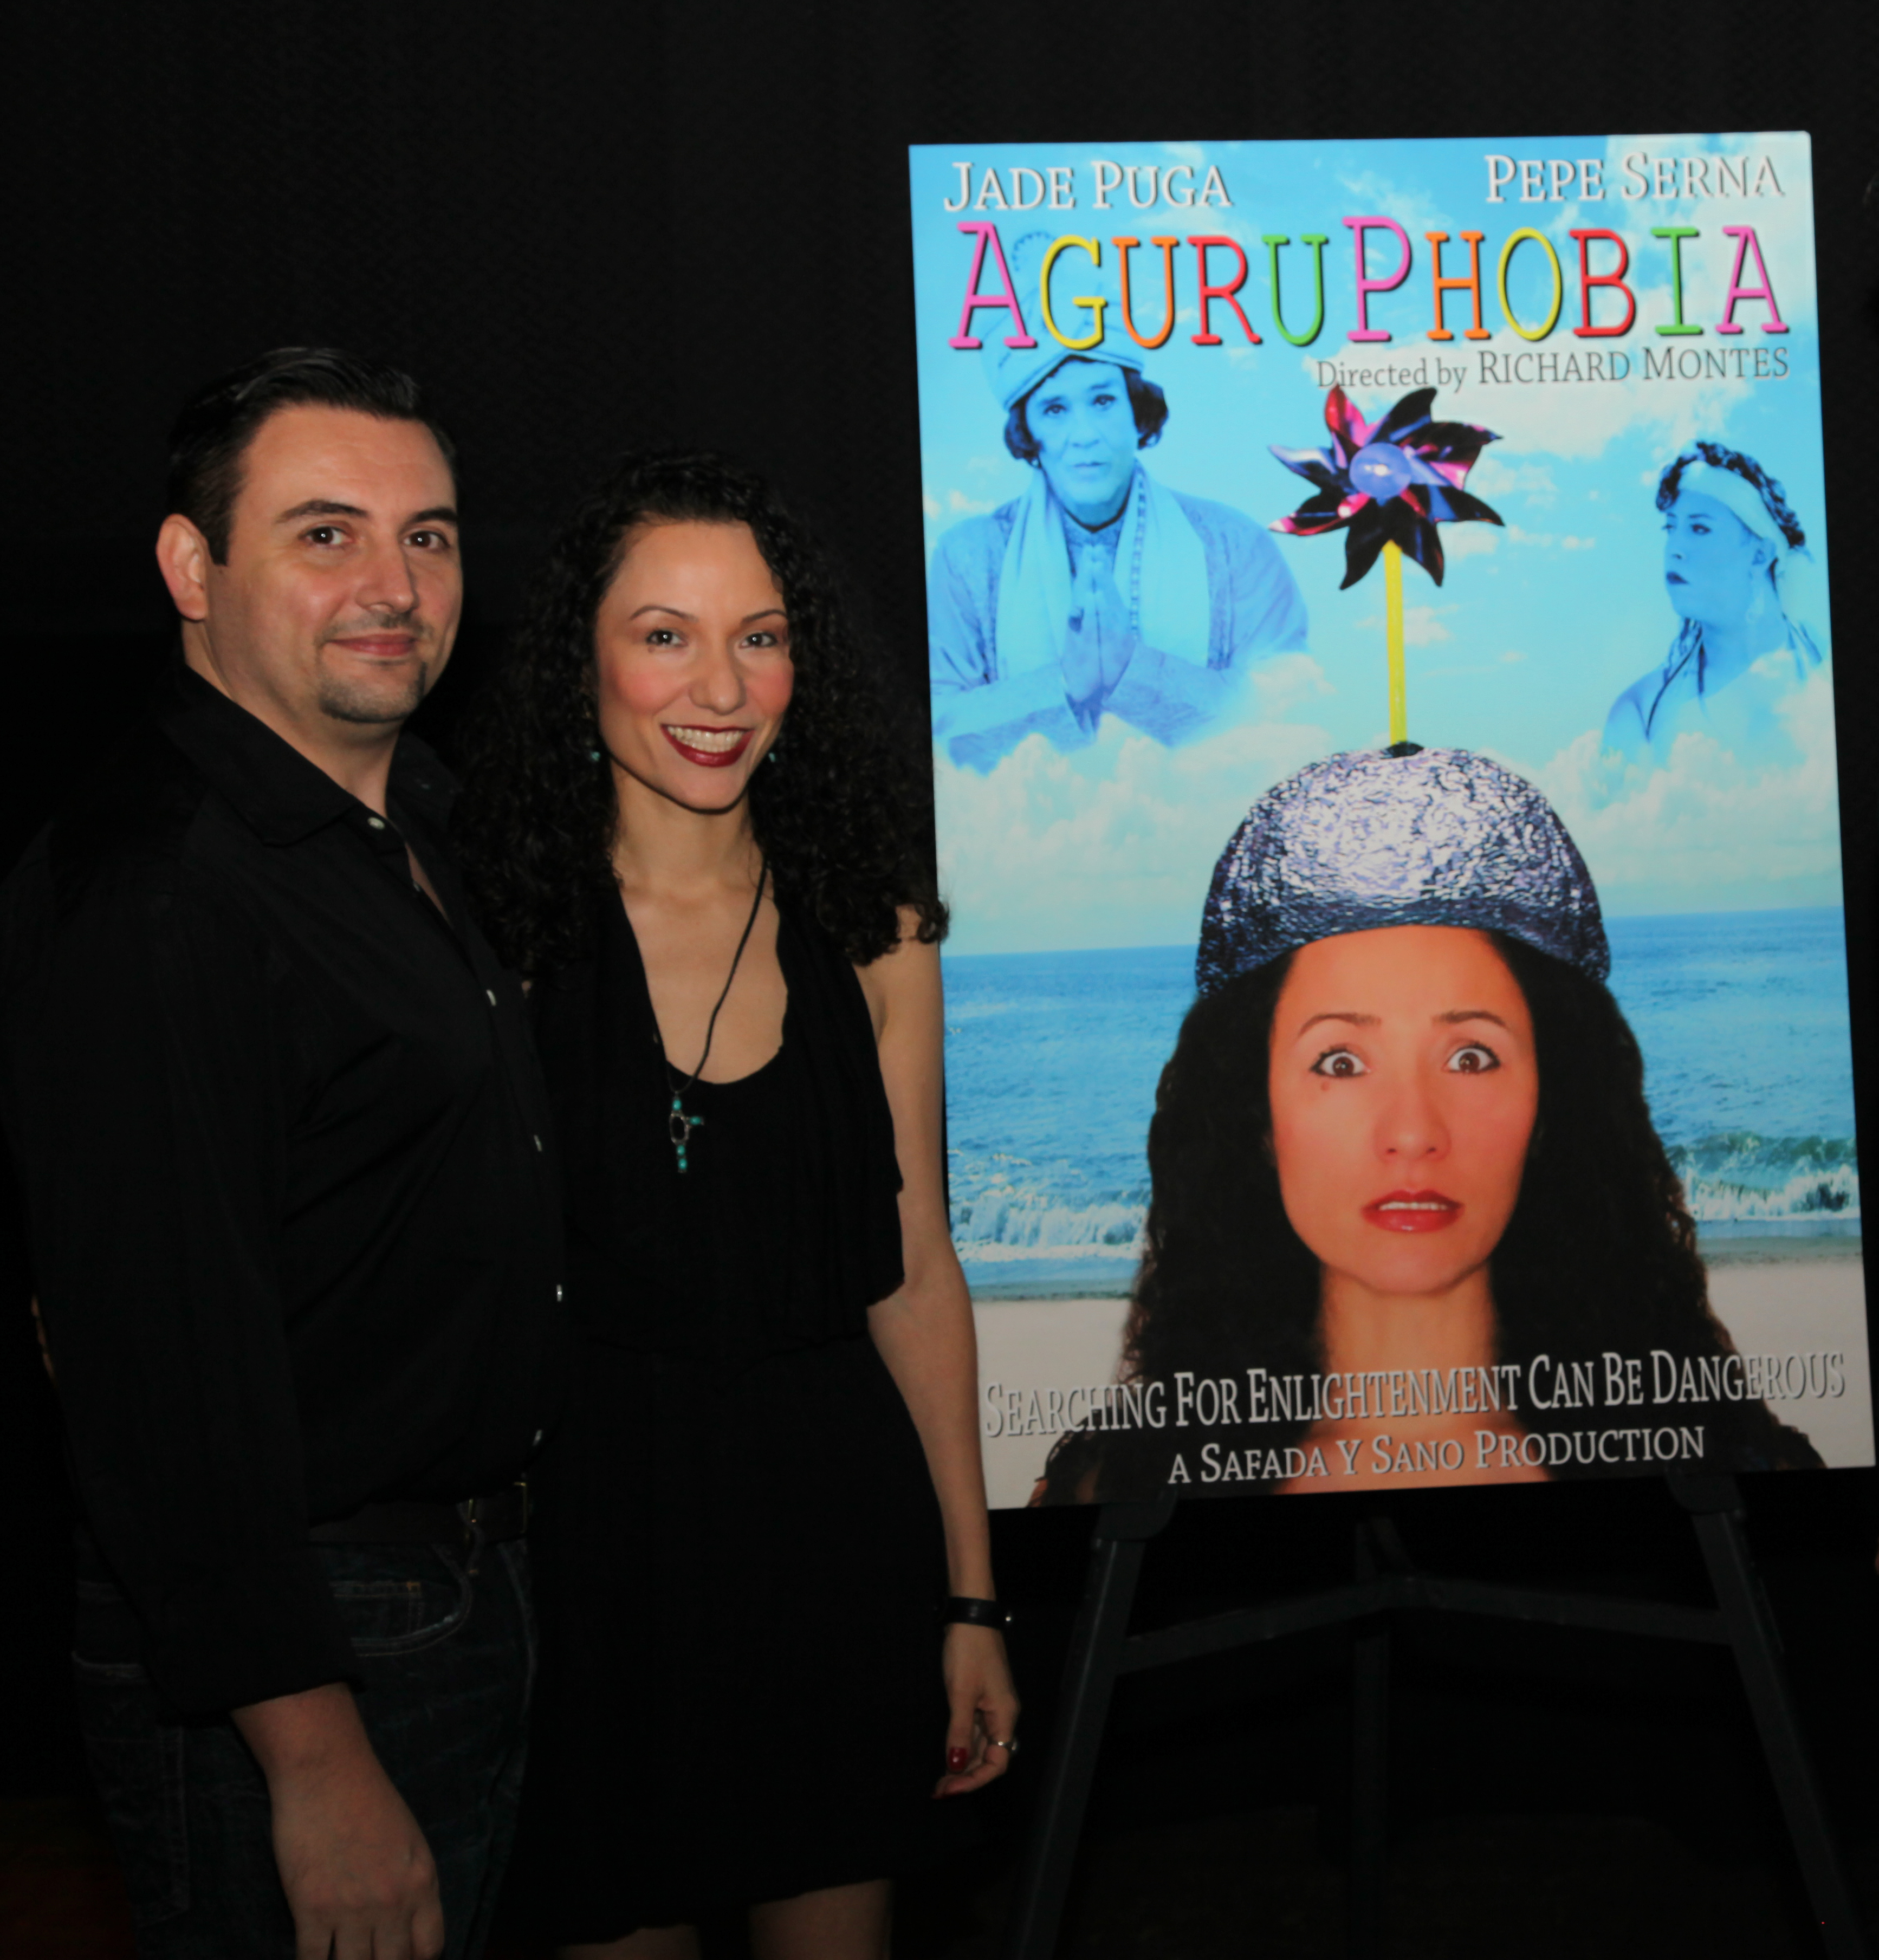 Filmmaking team behind Aguruphobia, writer/director Richard Montes and writer/producer/lead actress Jade Puga.